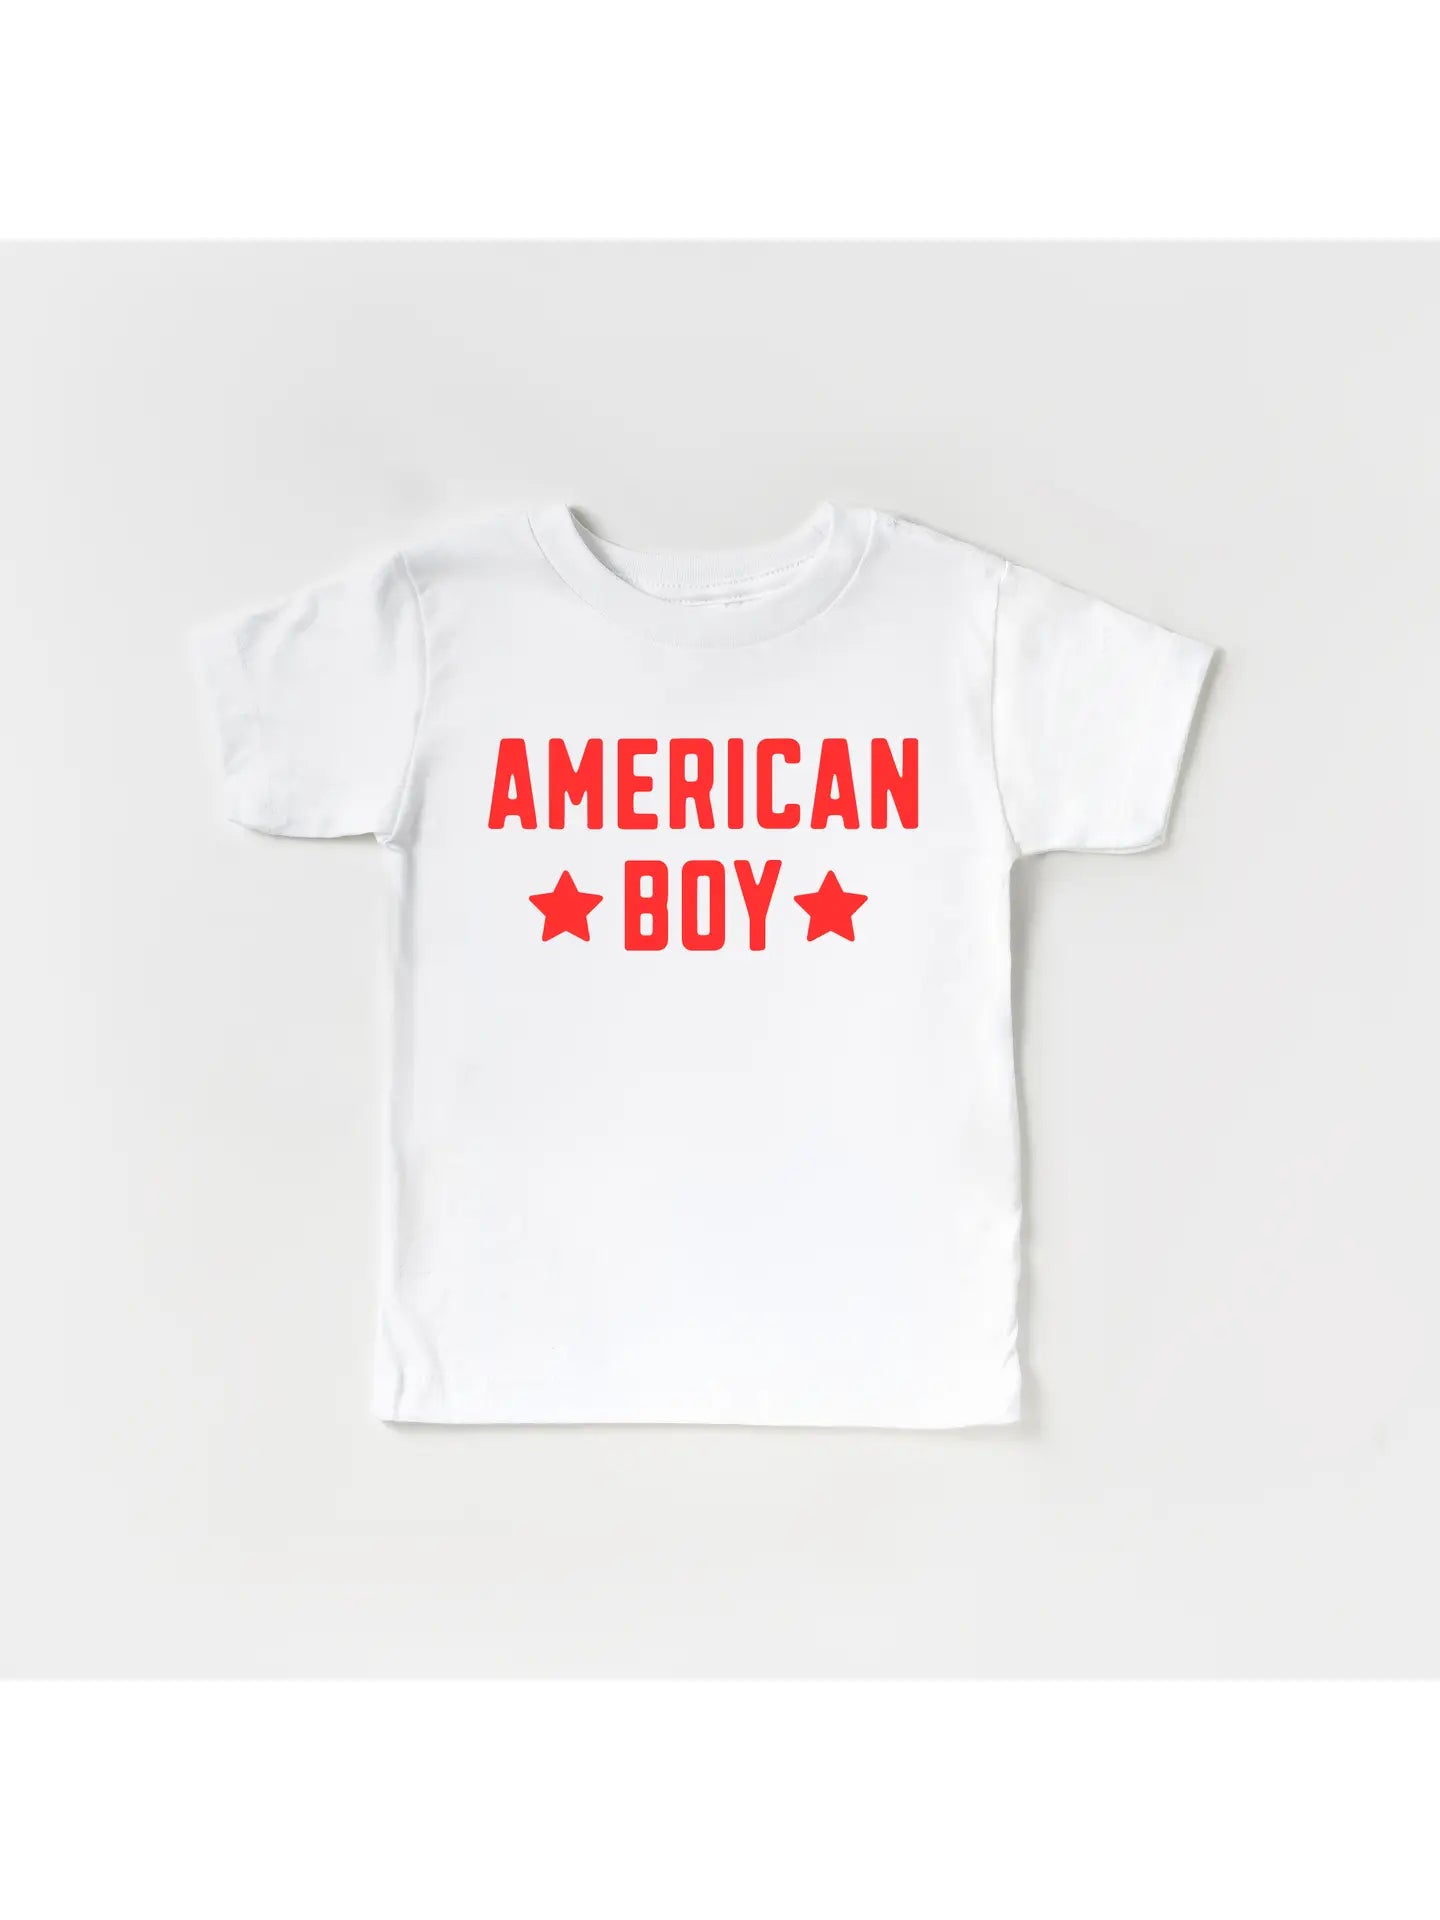 American Boy Tee